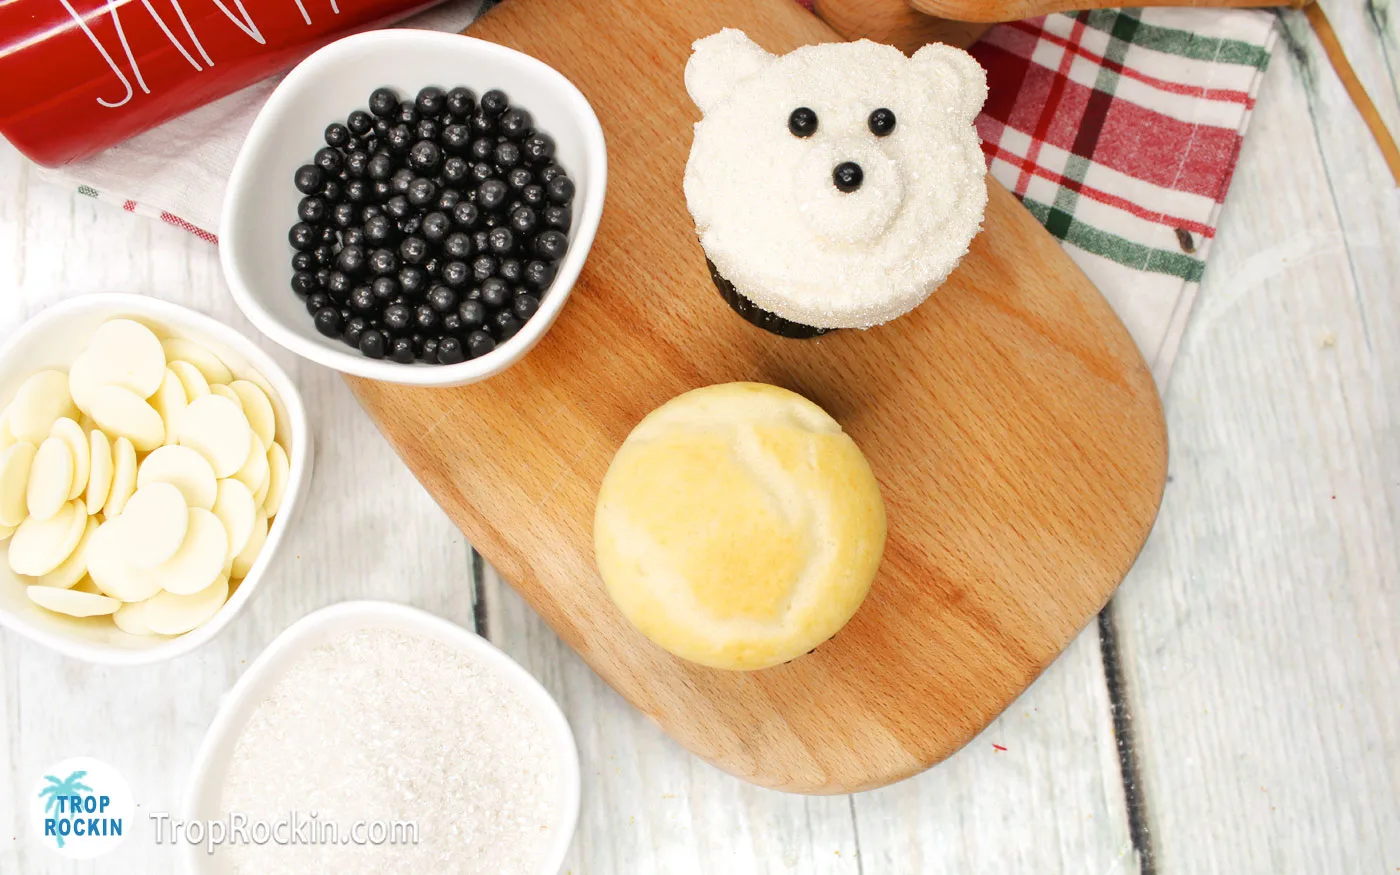 Basic Polar Bear Cupcake Ingredients displayed on wood background. Bowl of white chocolate wafers, sanding sugar, black pearl sprinkles, a vanilla cupcake and one fully decorated polar bear cupcake.